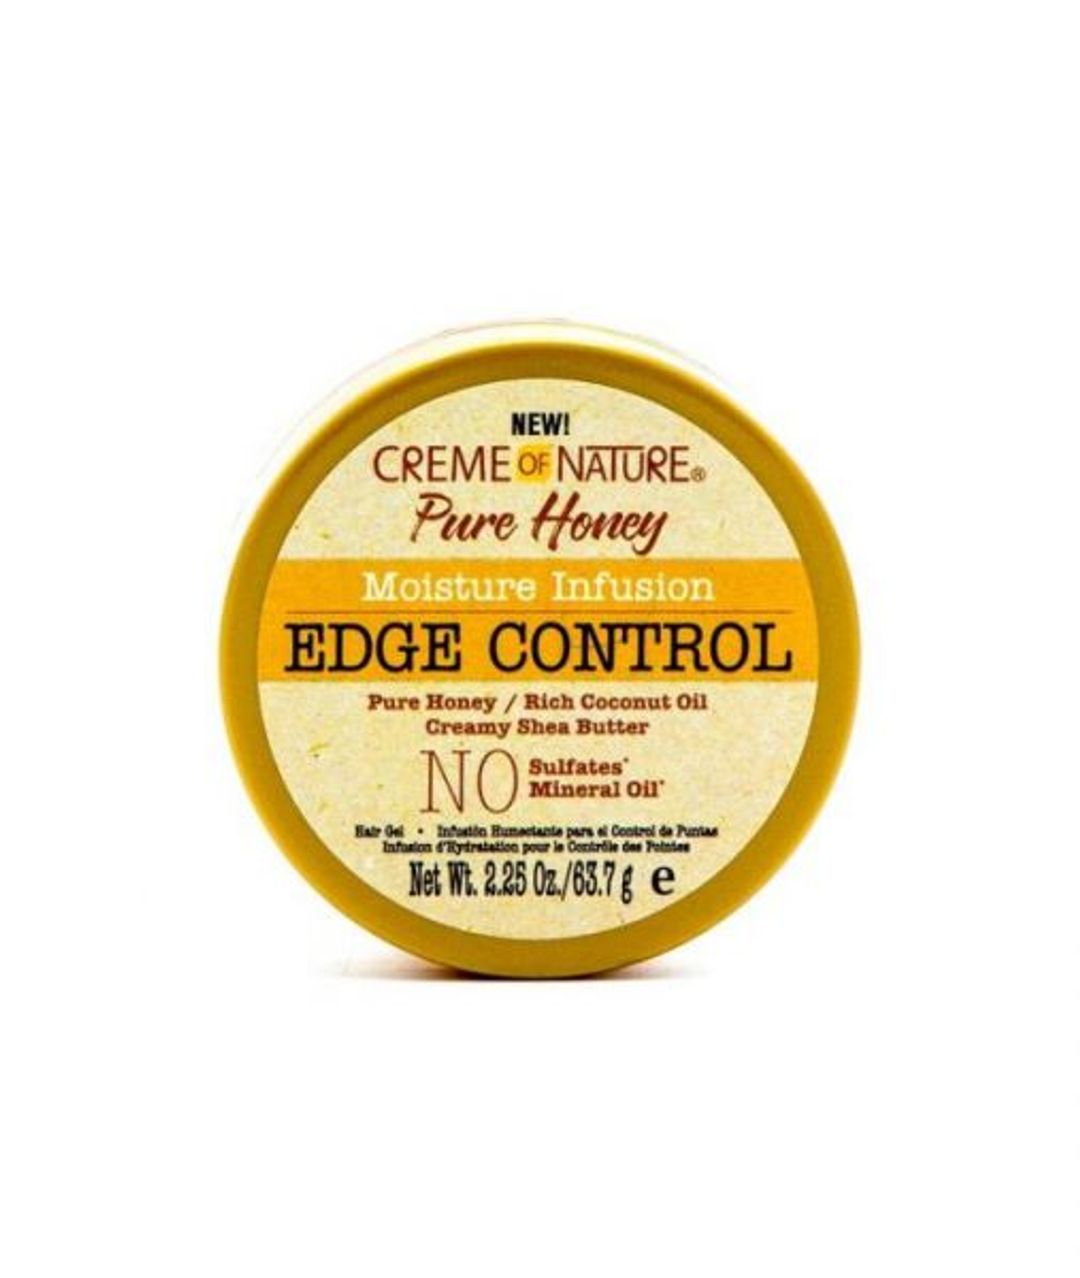 Creme Of Nature Pure Honey Moisture Infusion Edge Control - 2.25oz